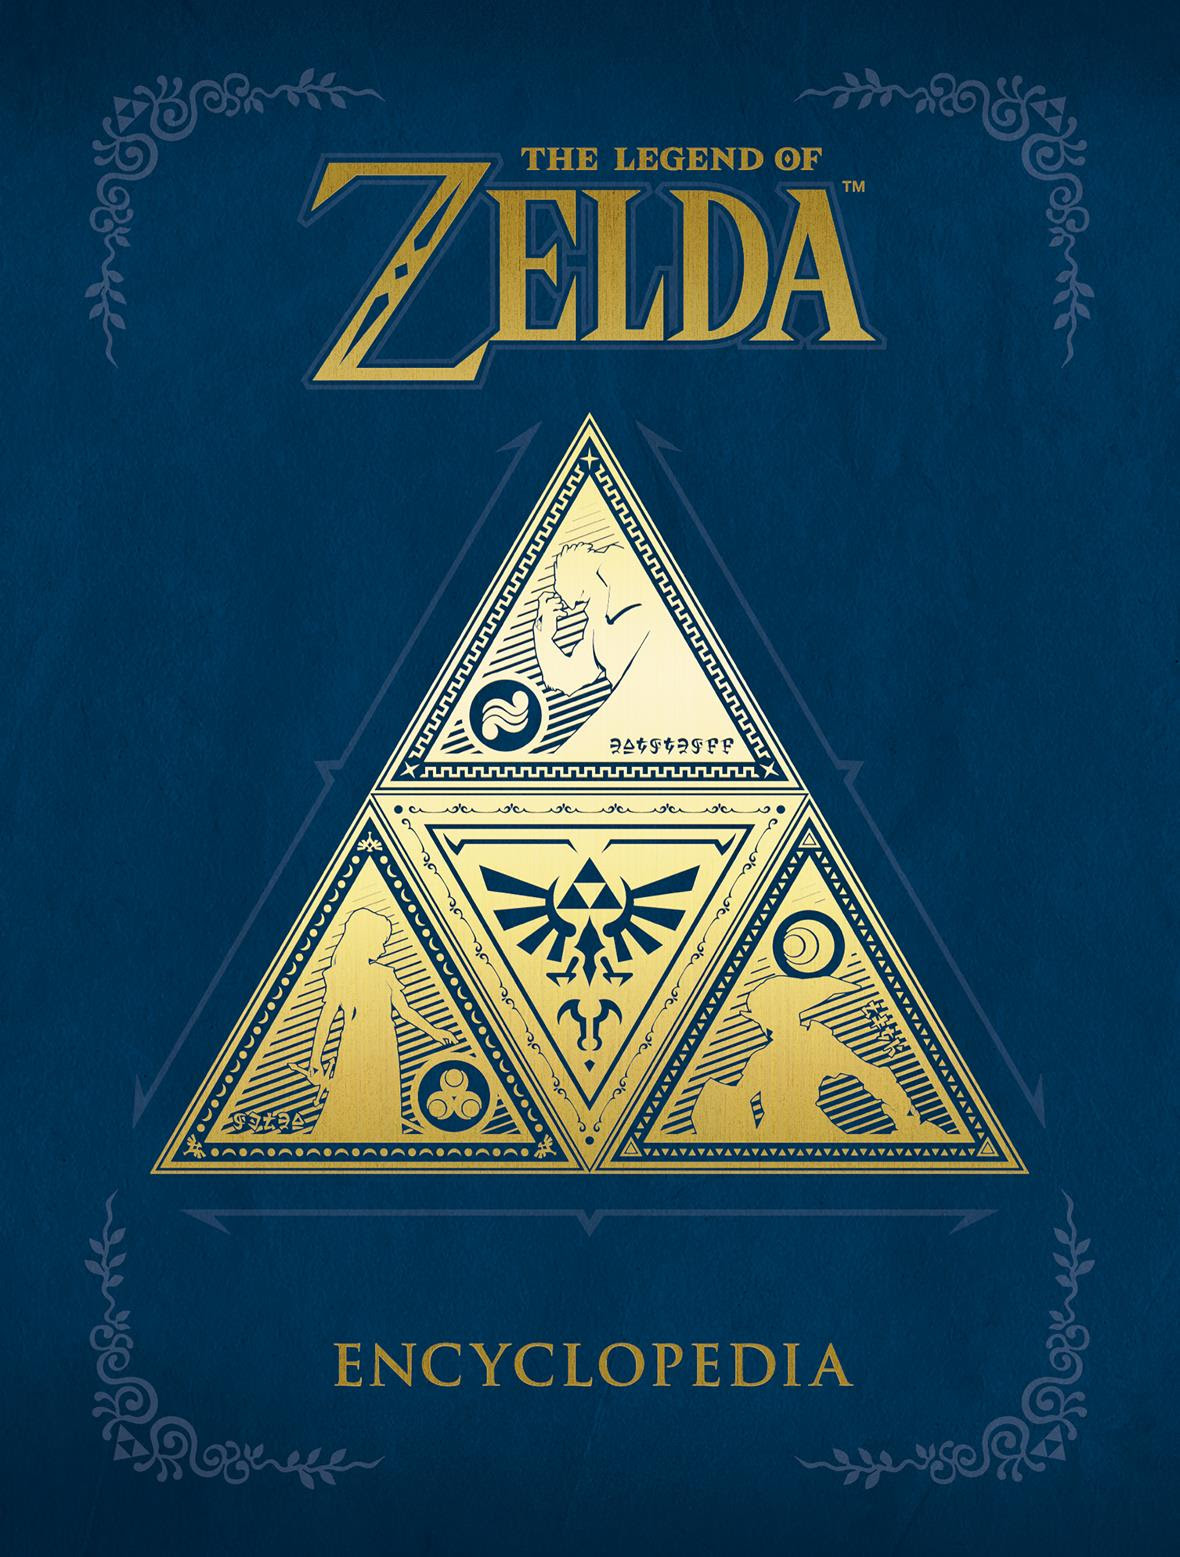 Get excited, 'The Legend of Zelda Encyclopedia' is coming April 2018!